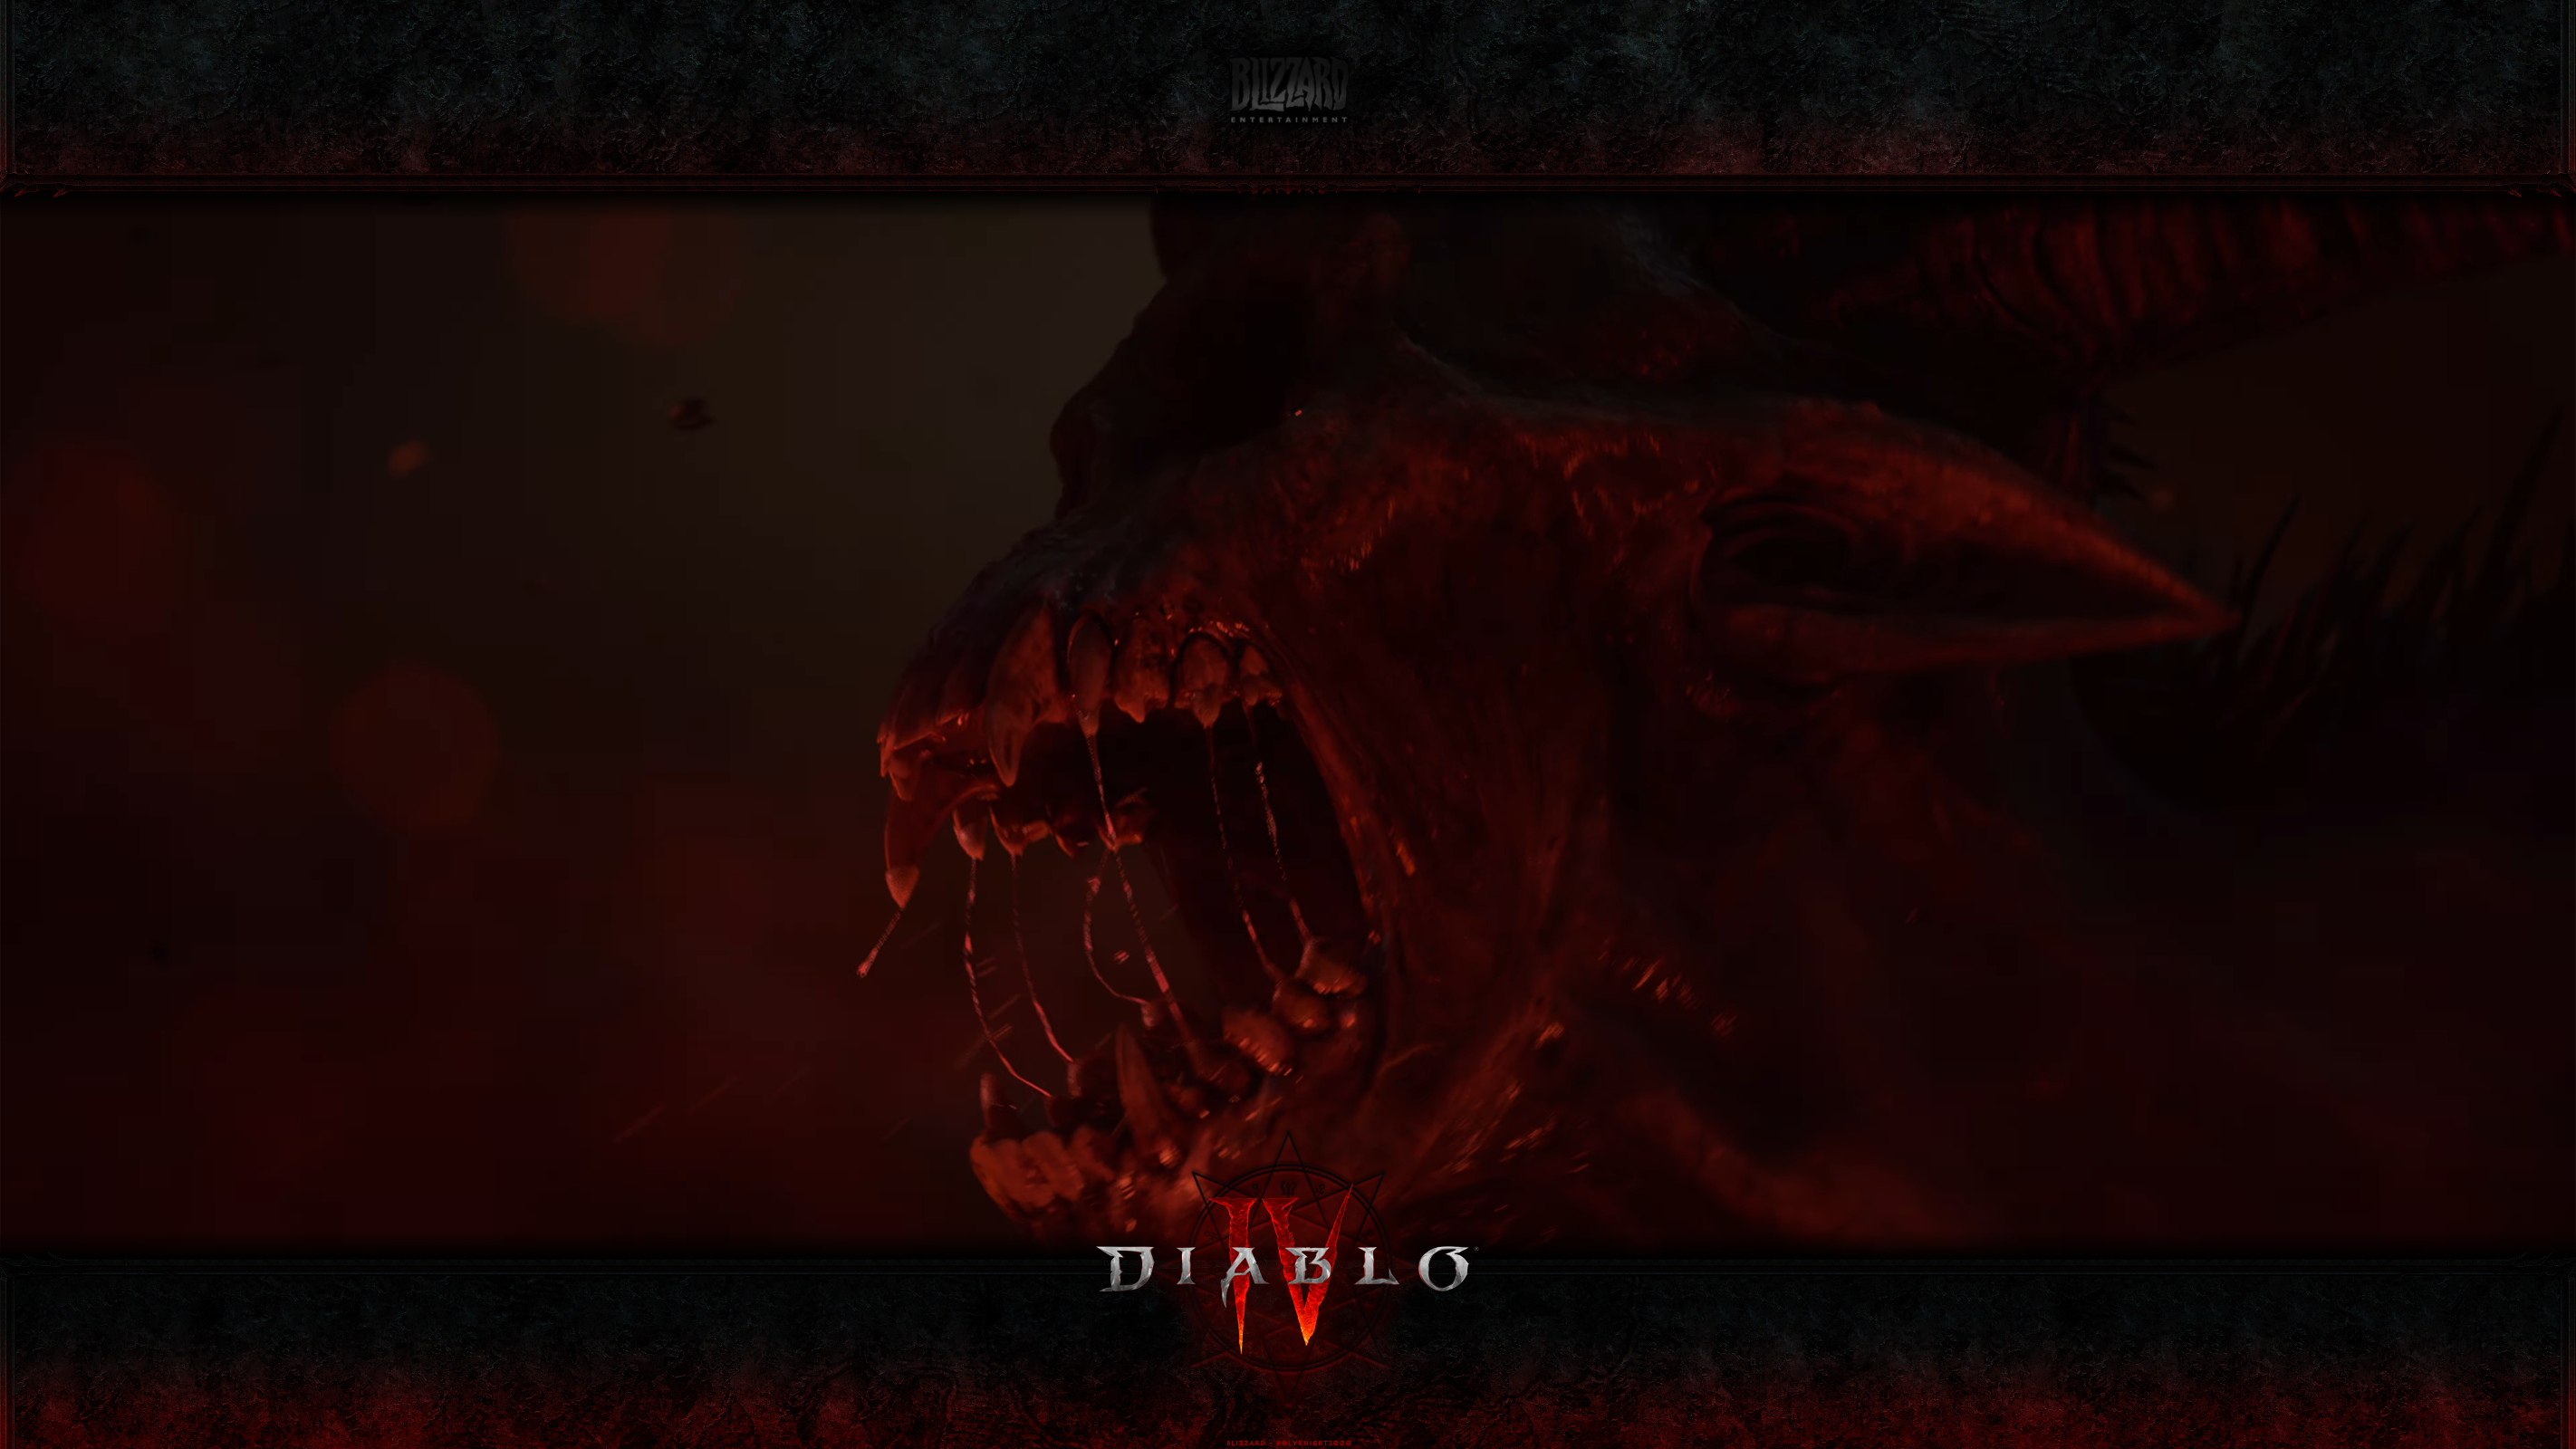 Diablo IV: The Release Date Trailer #22